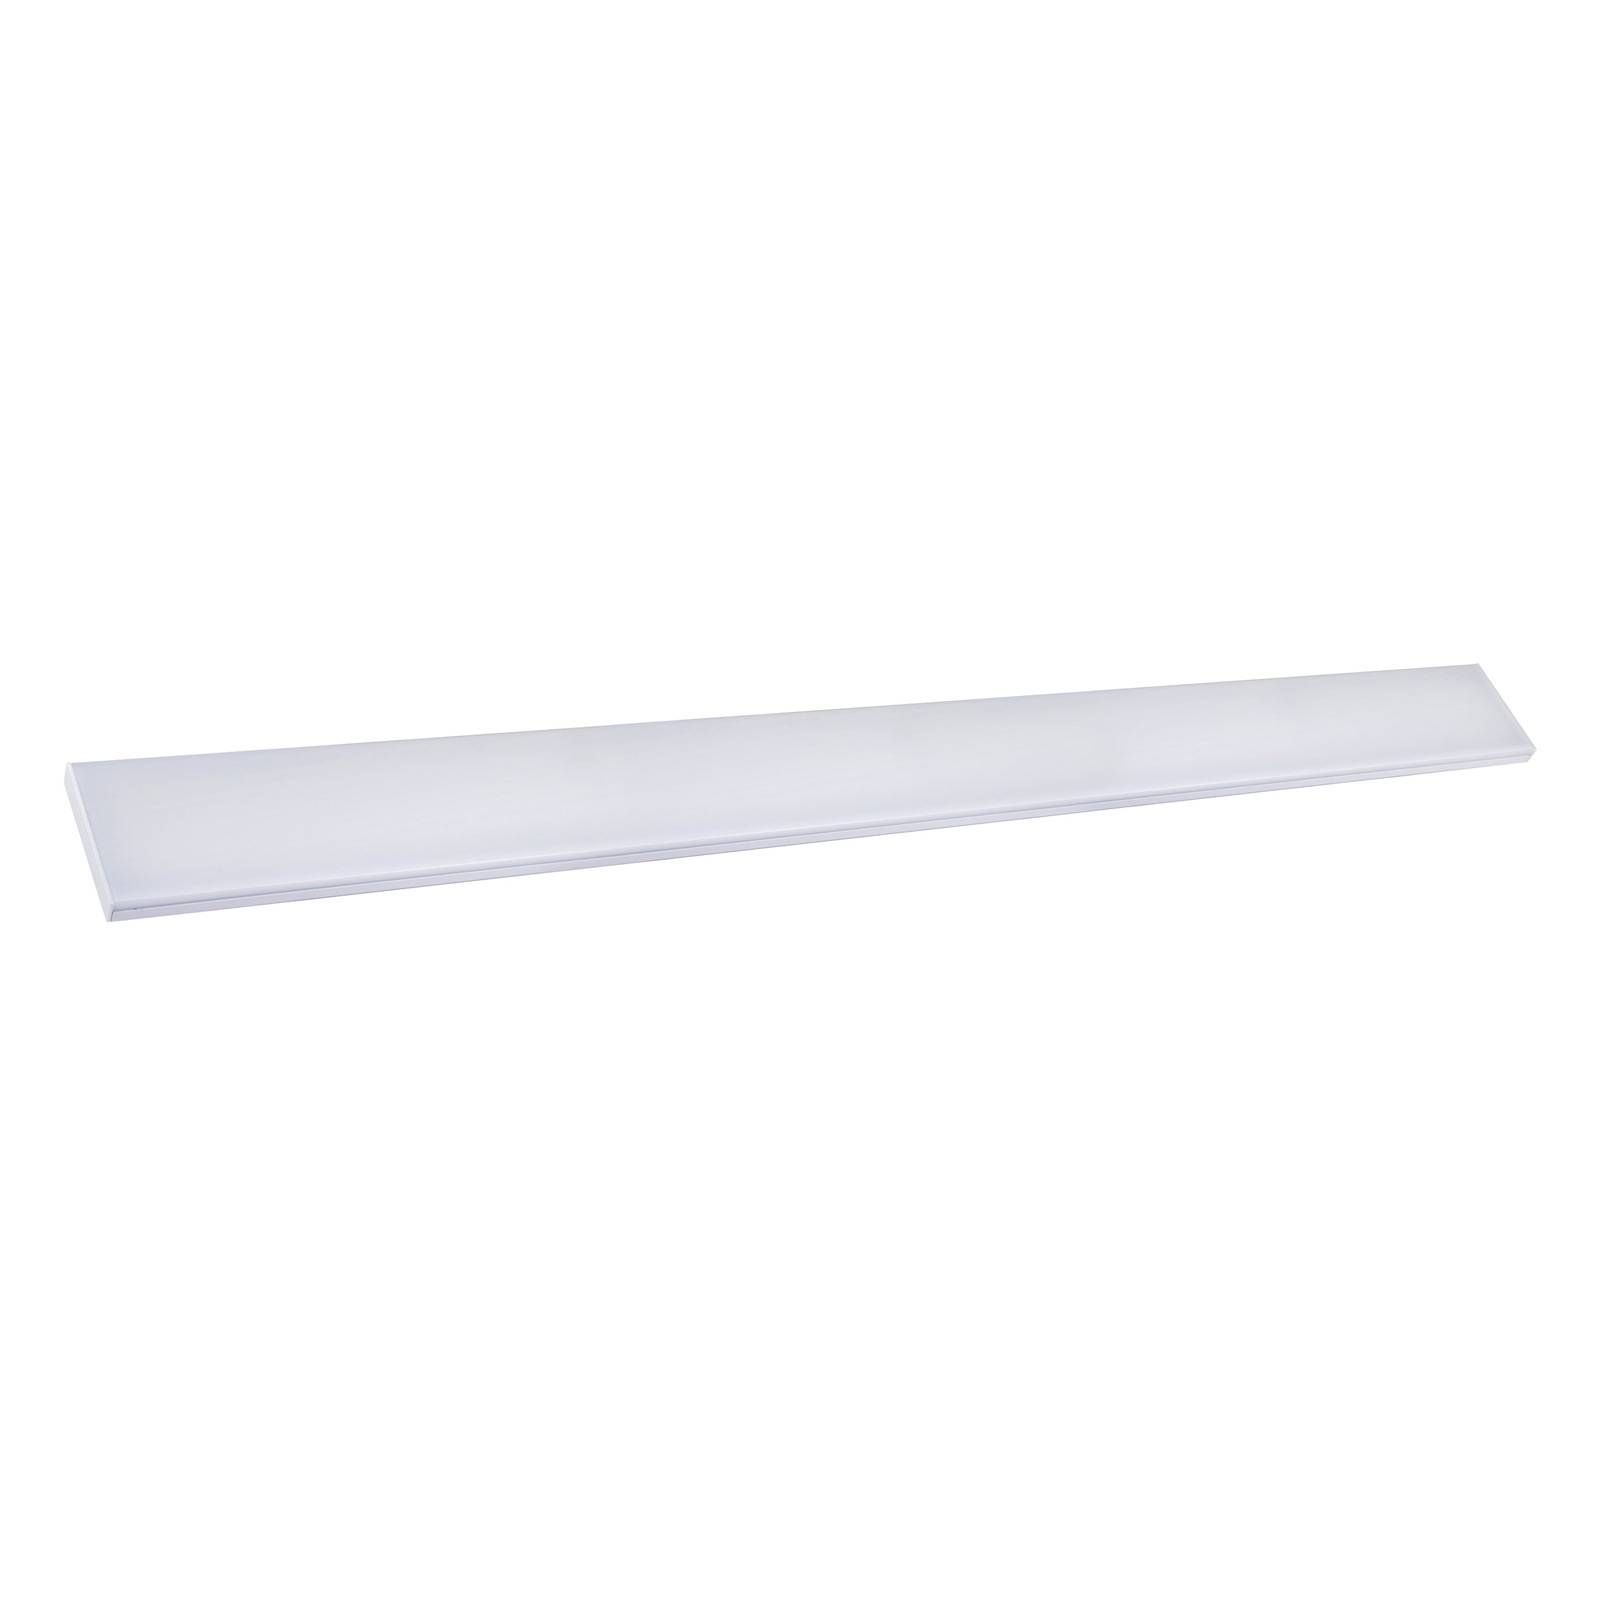 Müller-Licht Stropné LED svietidlo Planus 120 univerzálna biela, Pracovňa / Kancelária, hliník, plast, 48W, P: 120 cm, L: 12 cm, K: 4.5cm